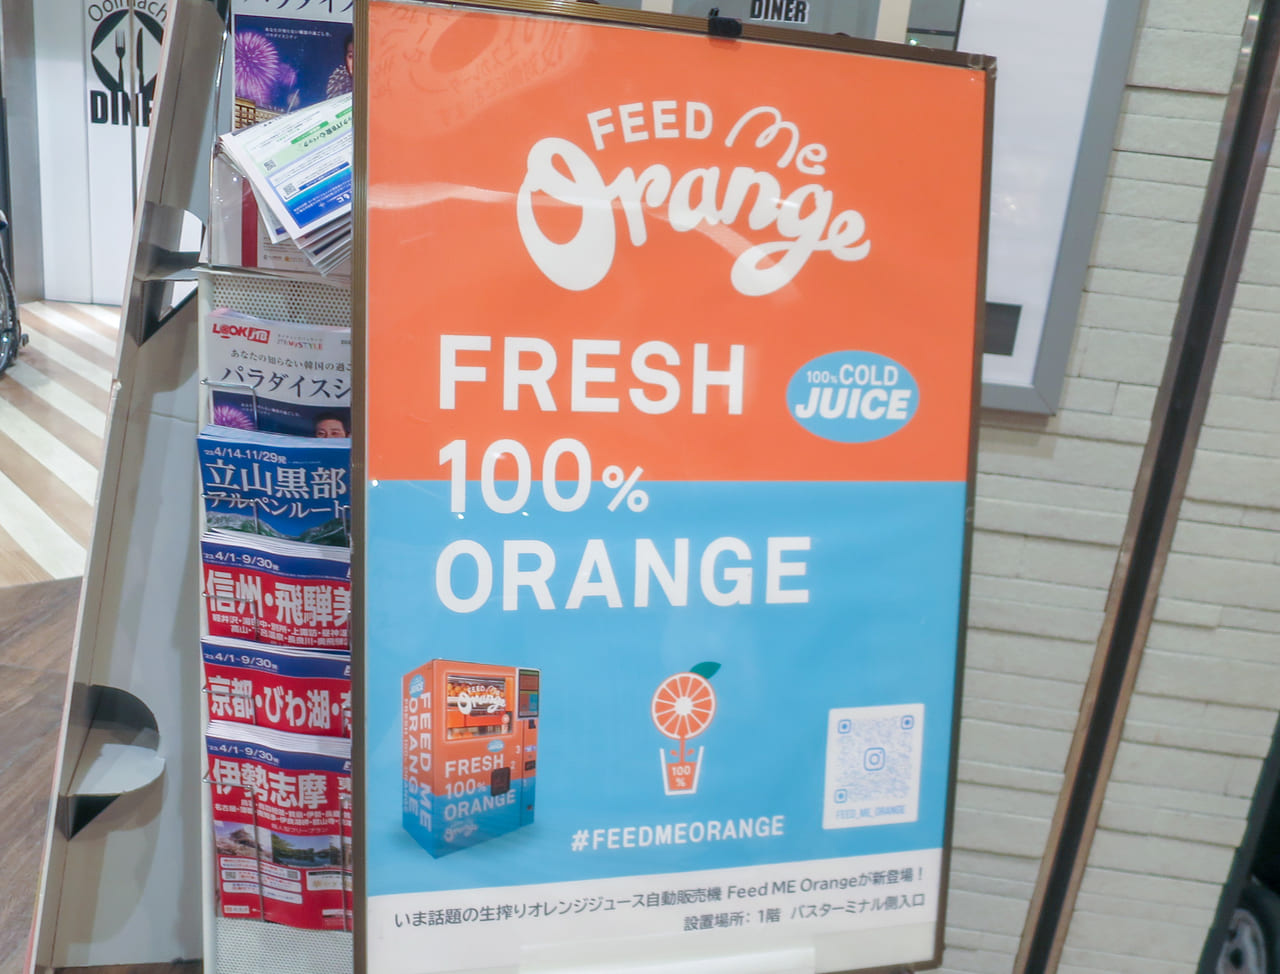 Feed ME Orangeイトーヨーカドー大井町店